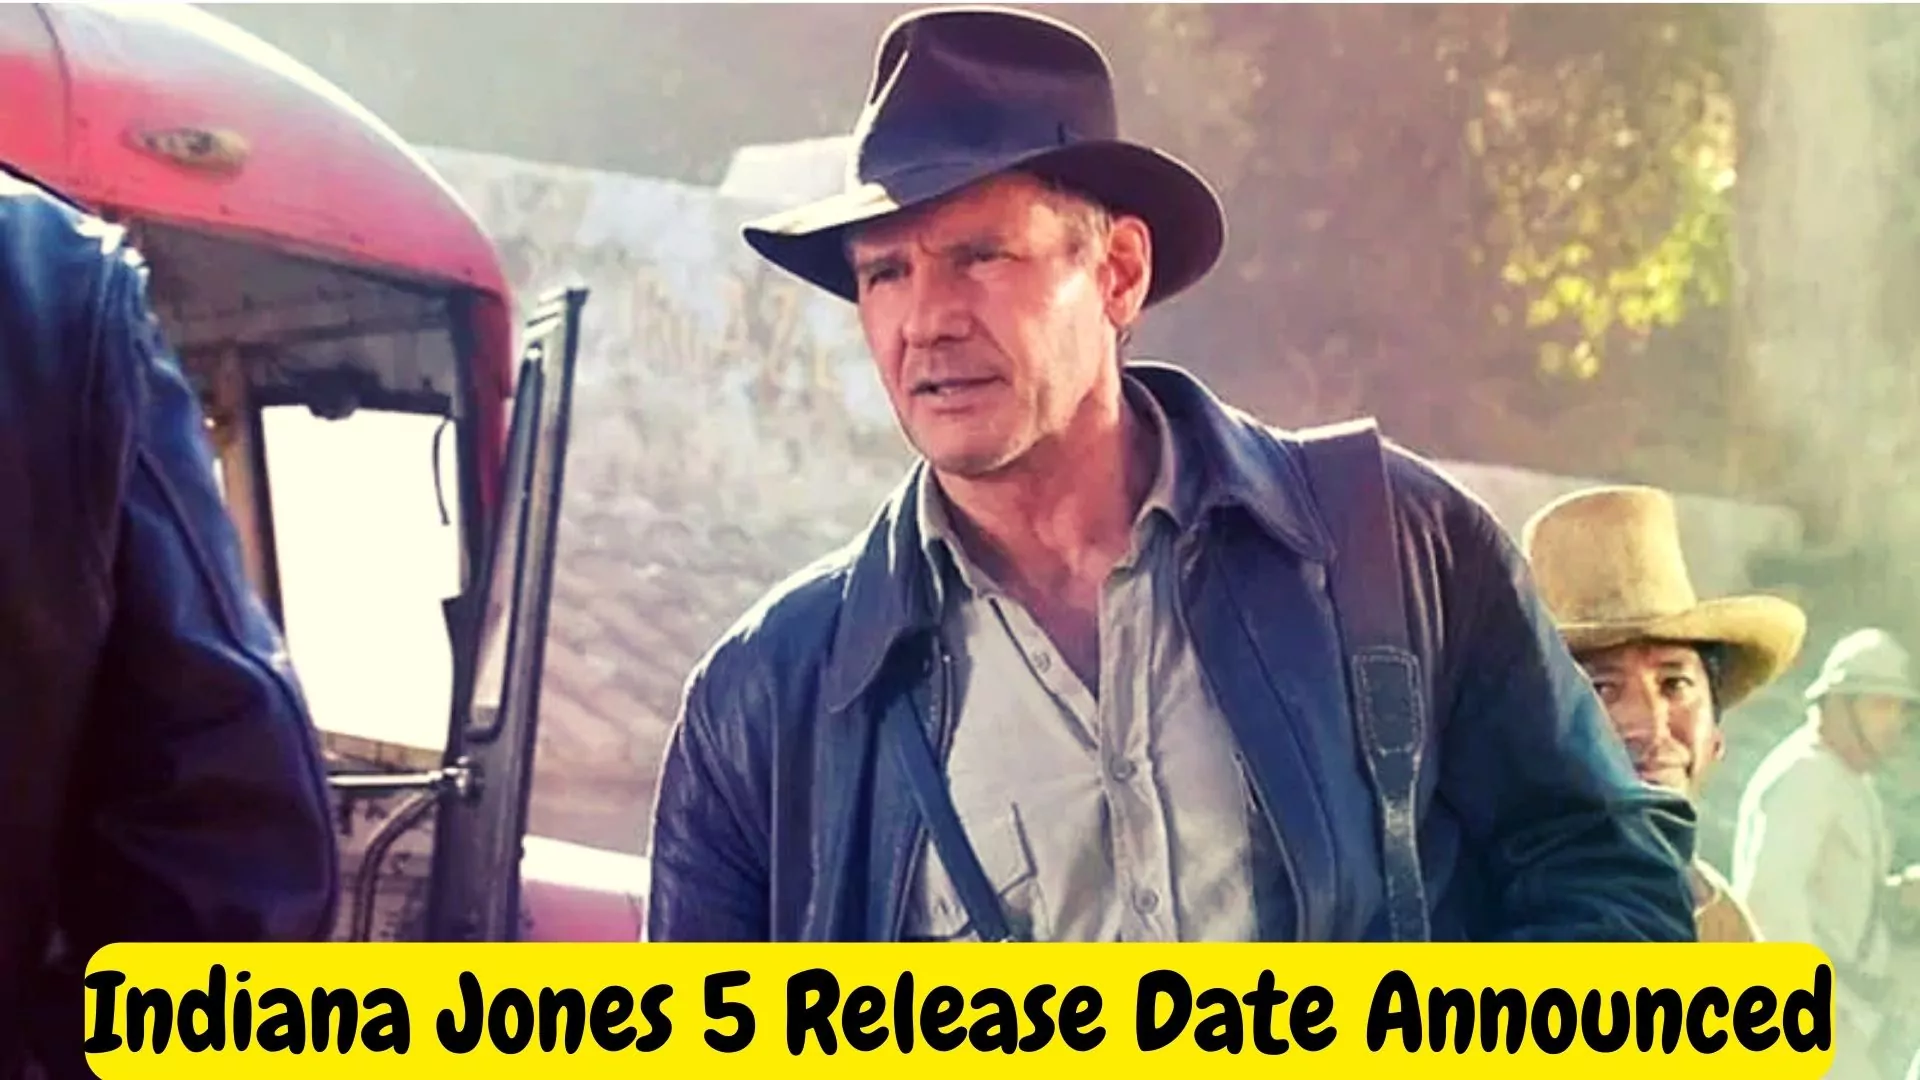 Indiana Jones 5 Release Date Announced